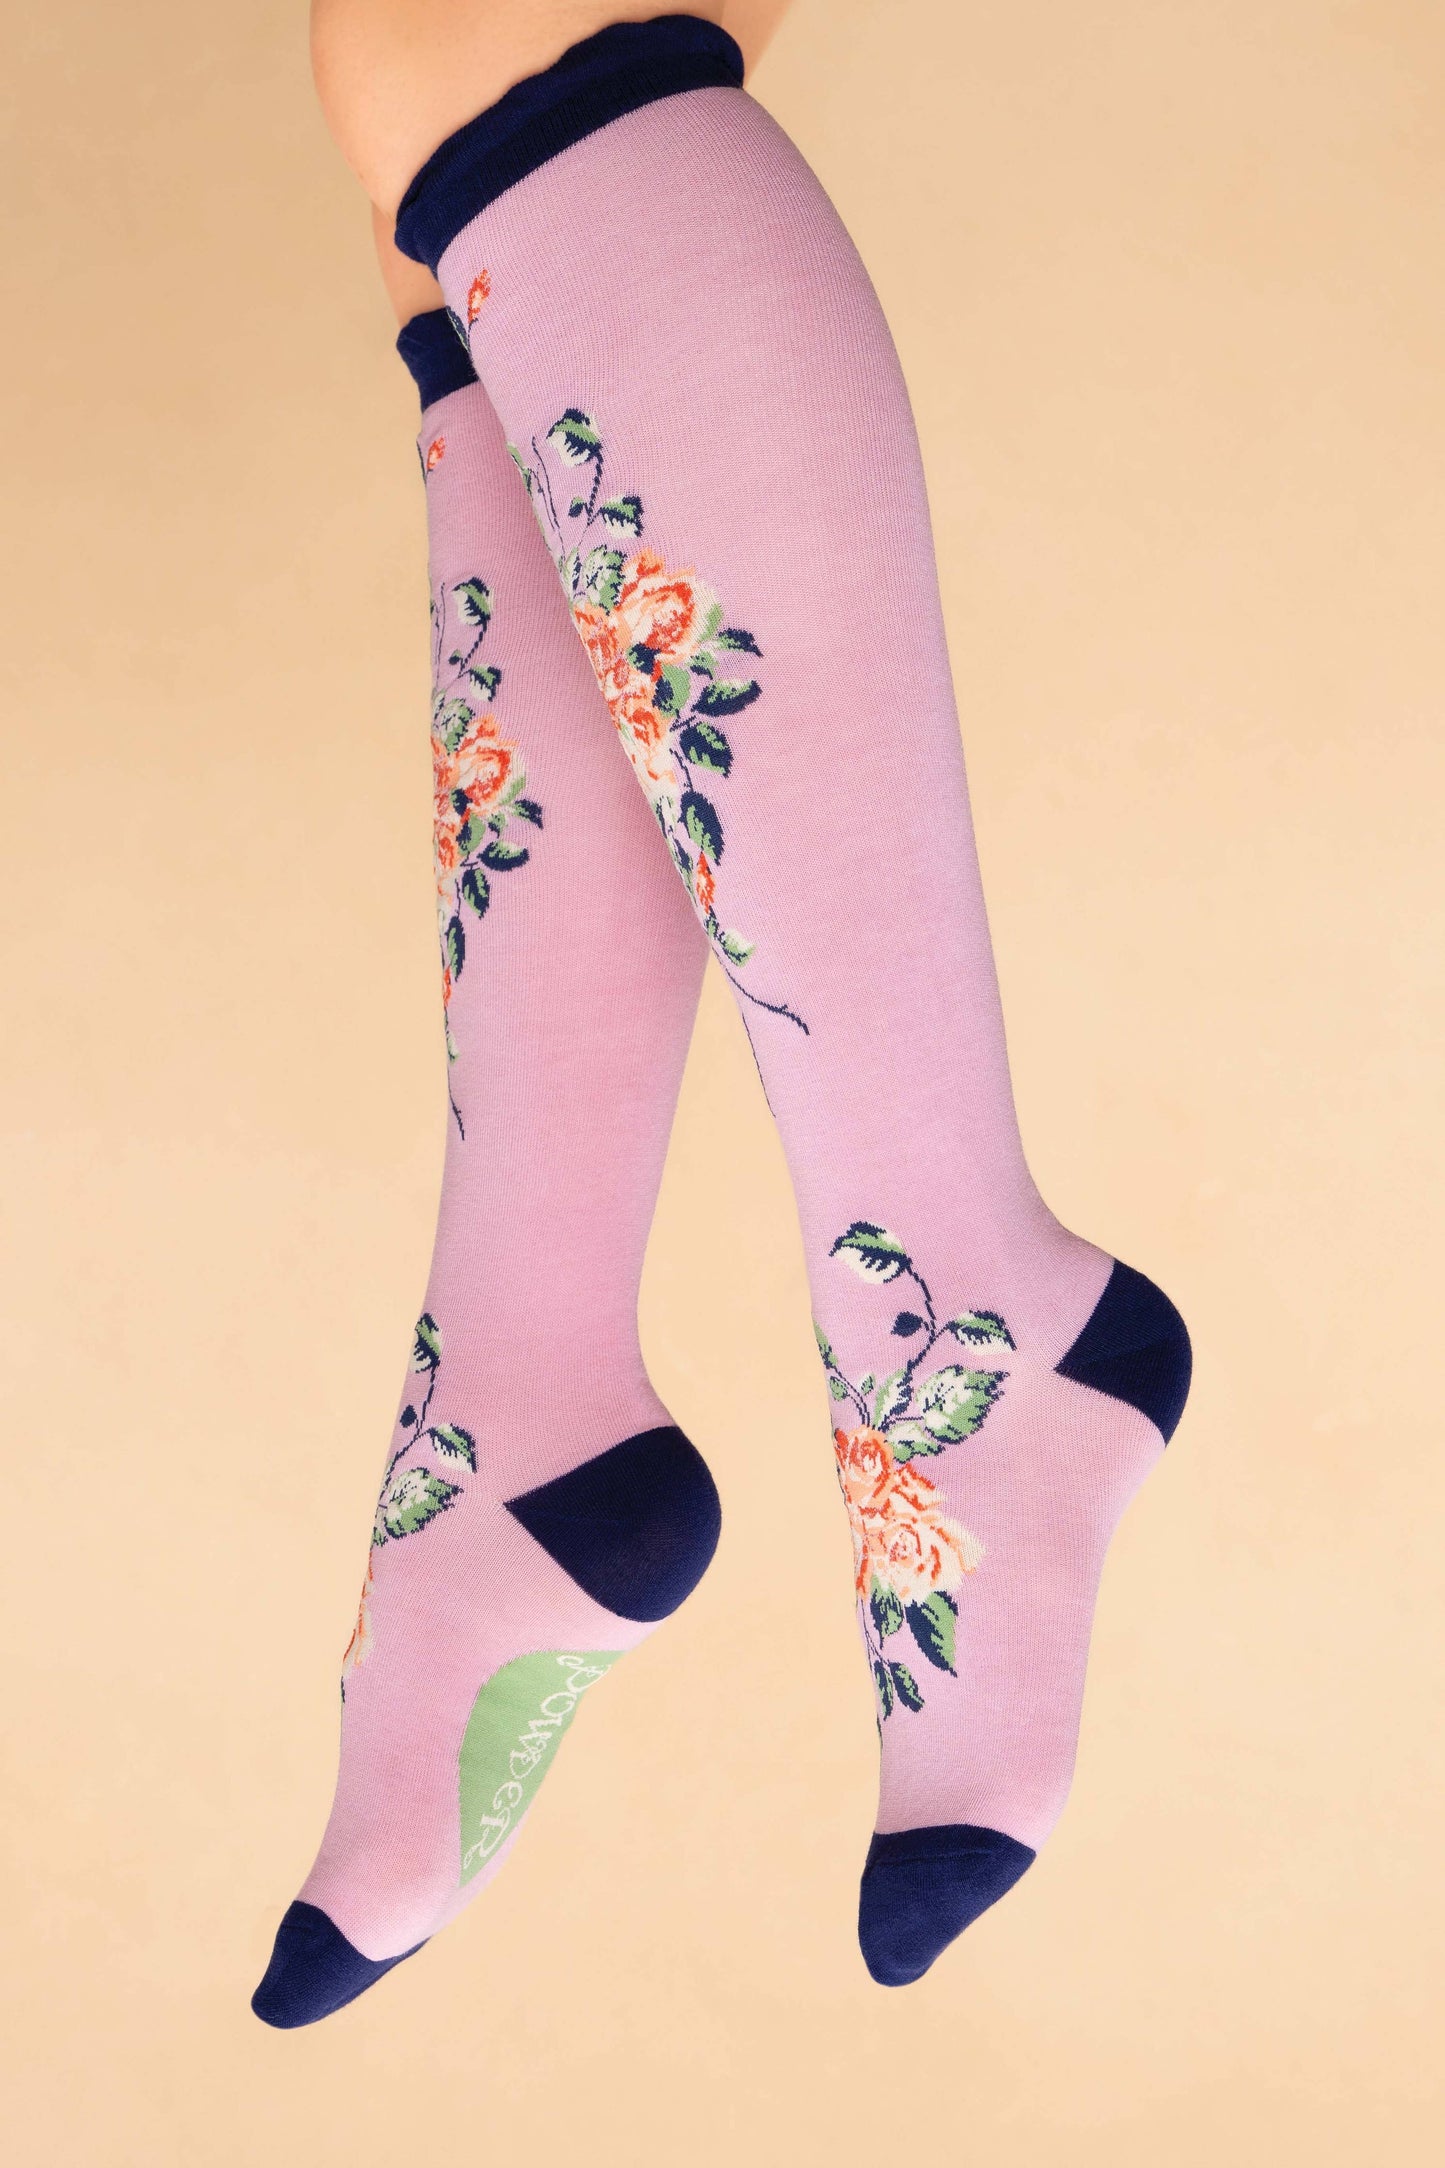 Floral Vines Long Socks